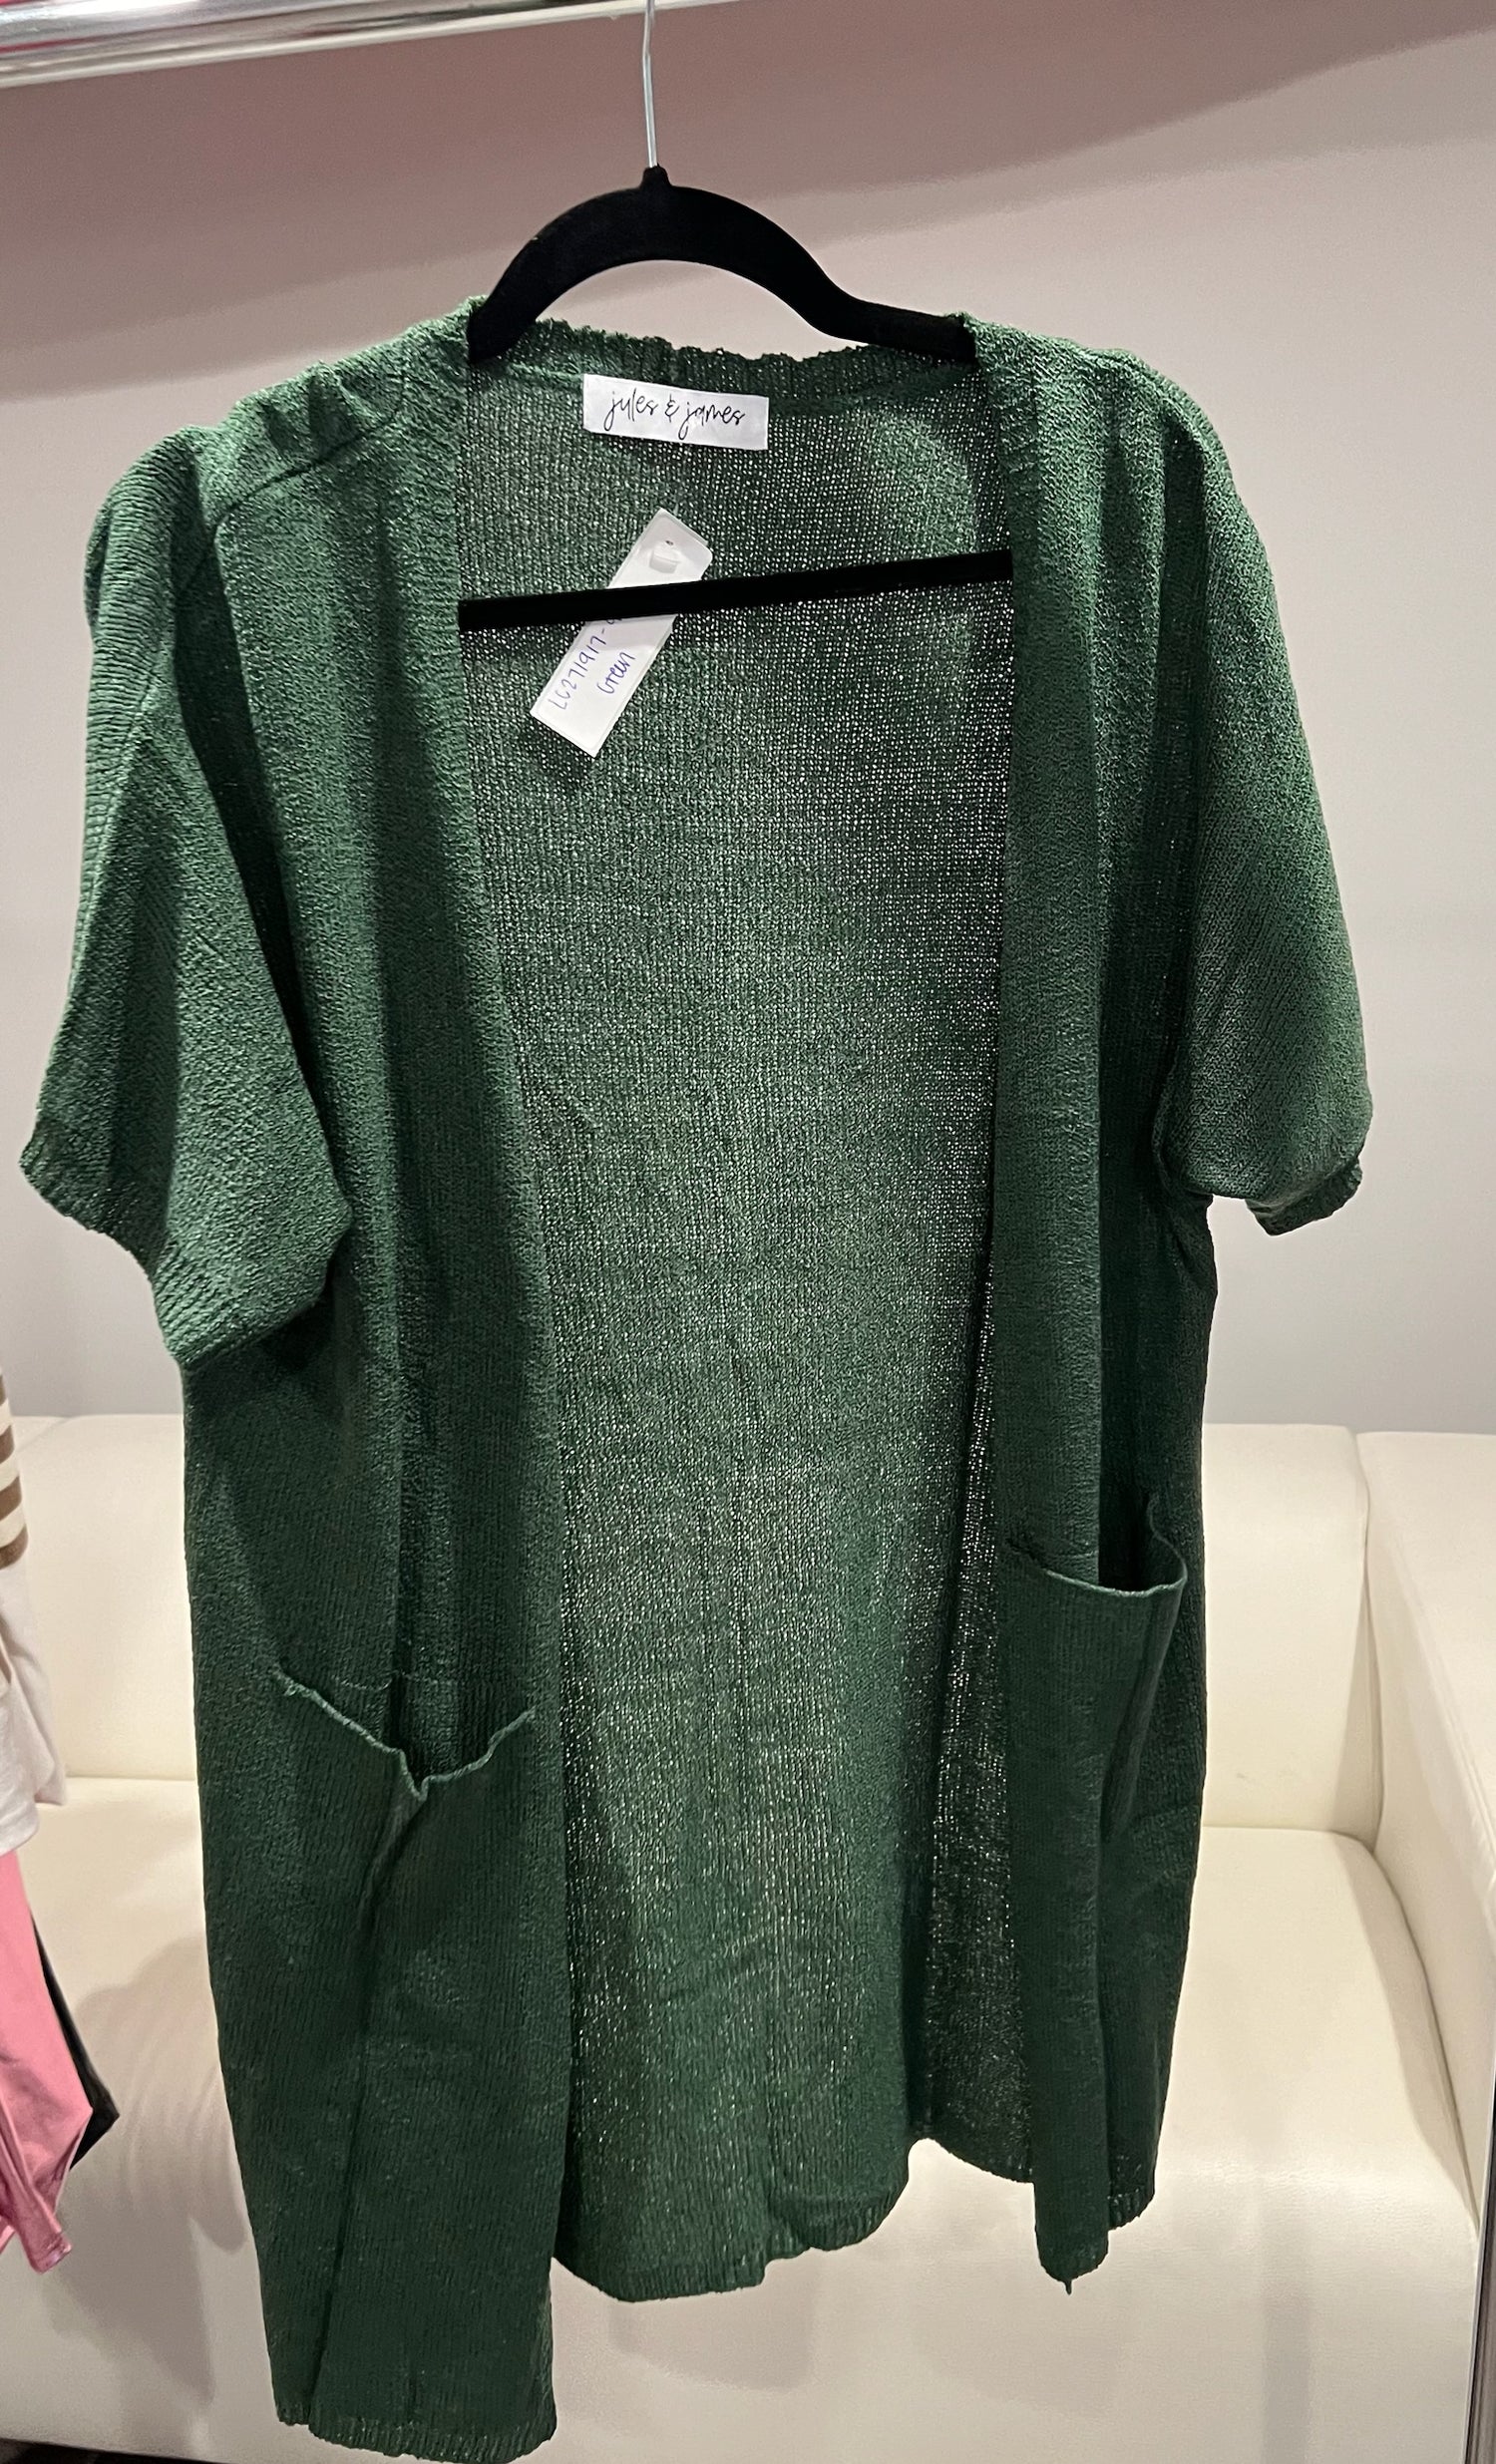 Size small Green Knit Cardigan